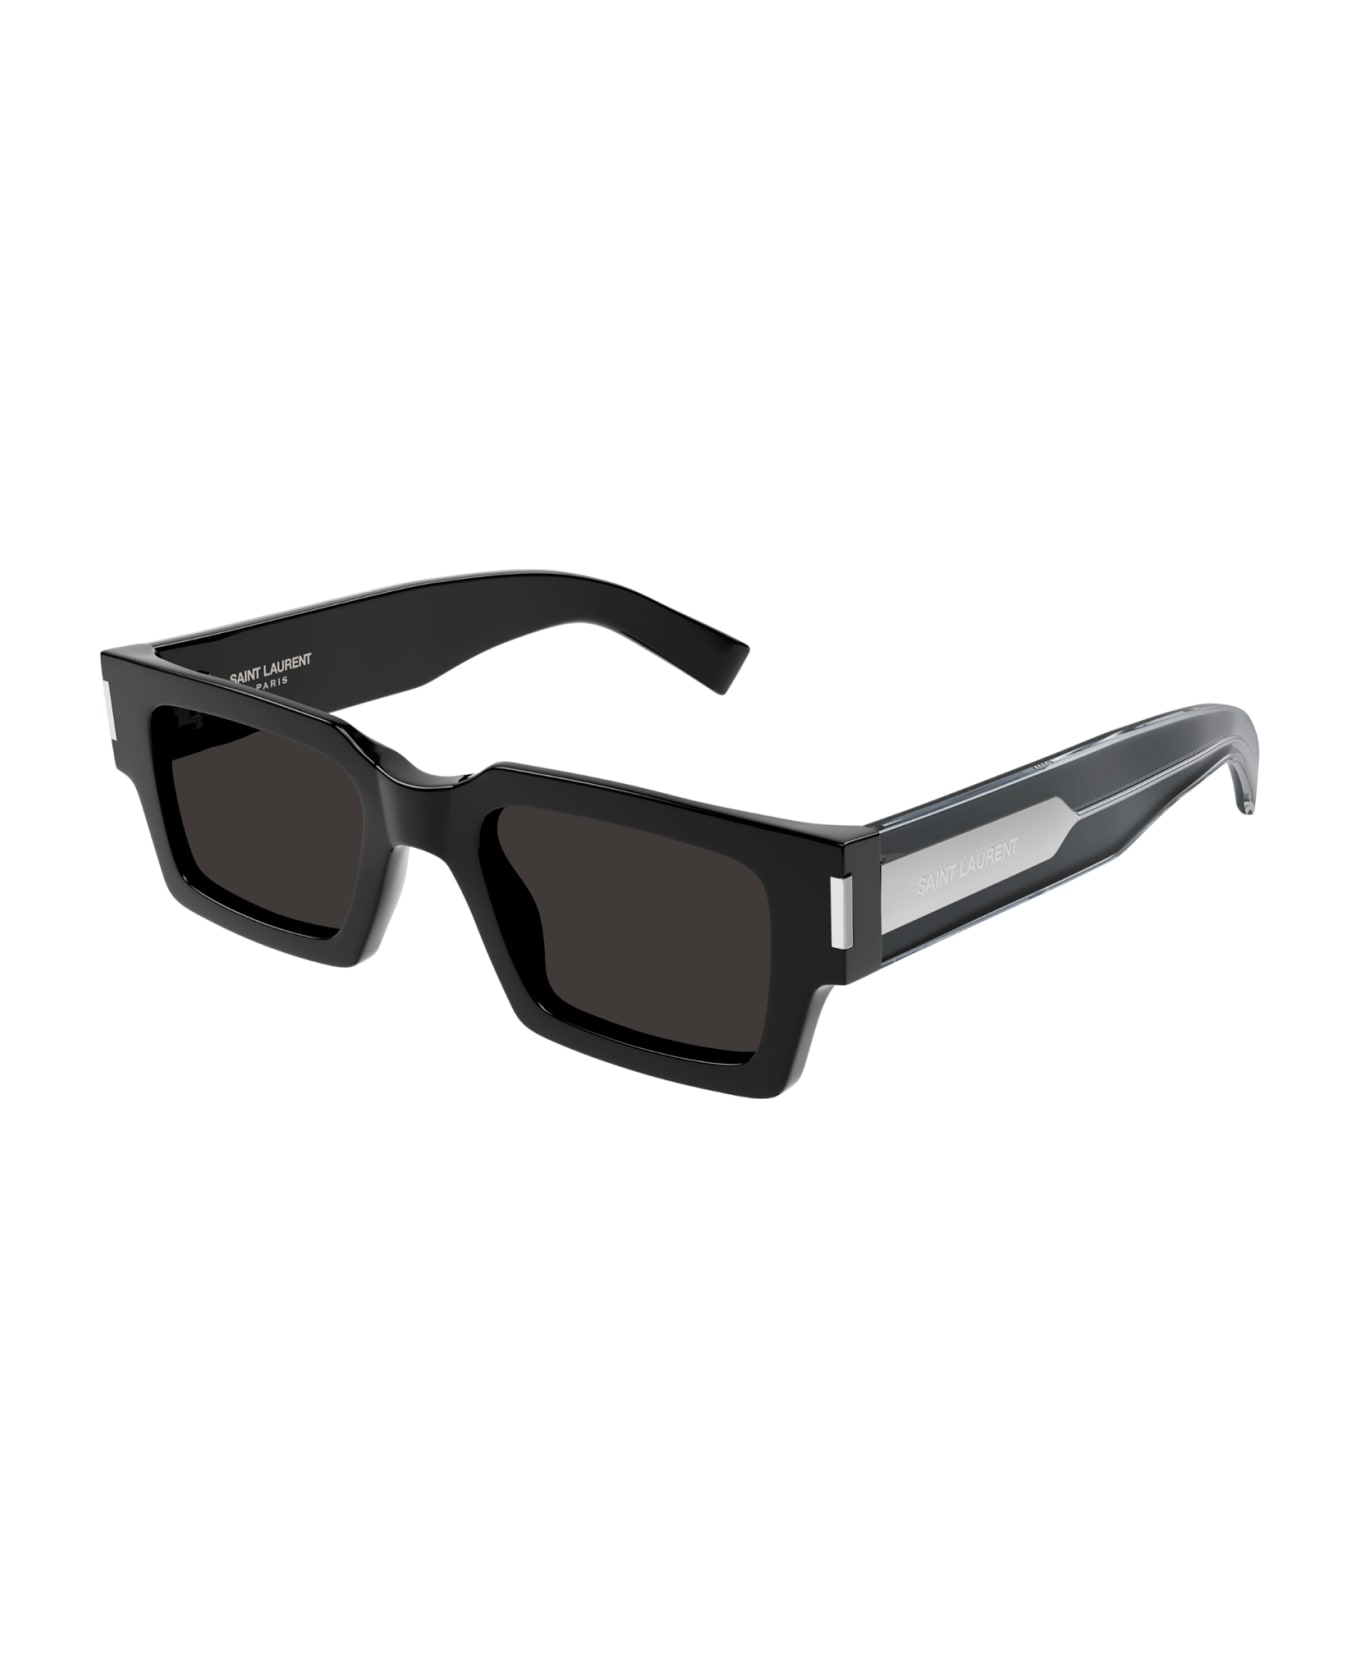 Saint Laurent Eyewear SL 572 Sunglasses - Black Crystal Grey